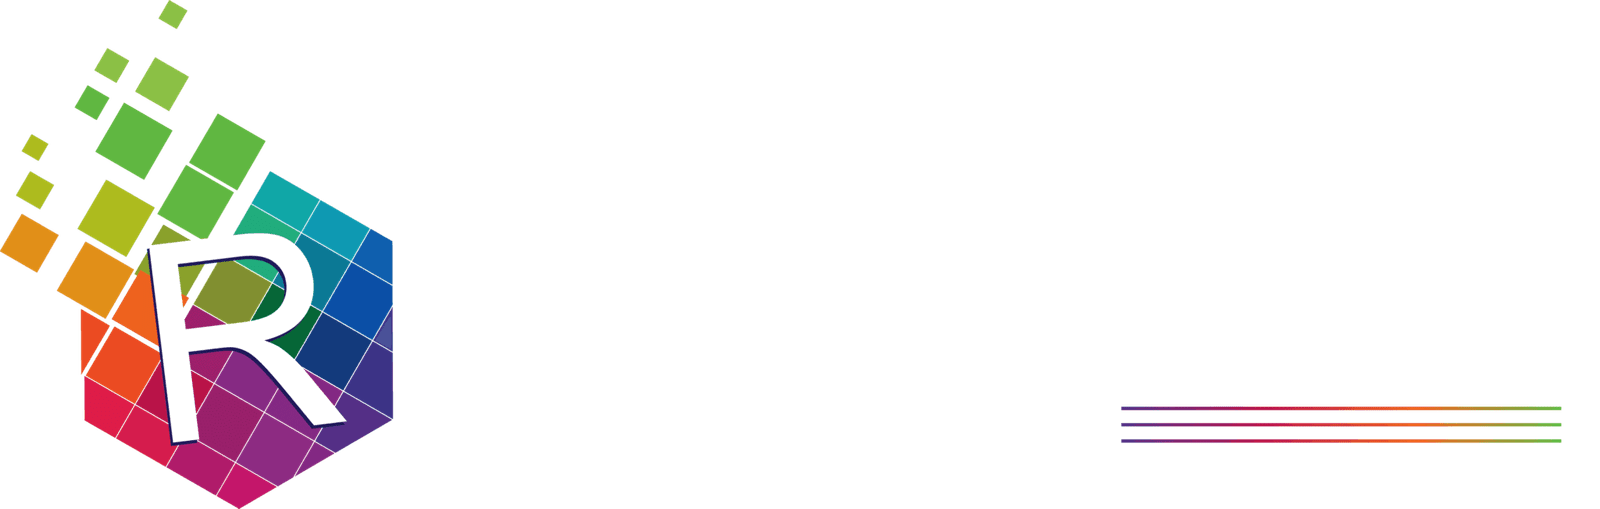 Rapidsmartsoftwares